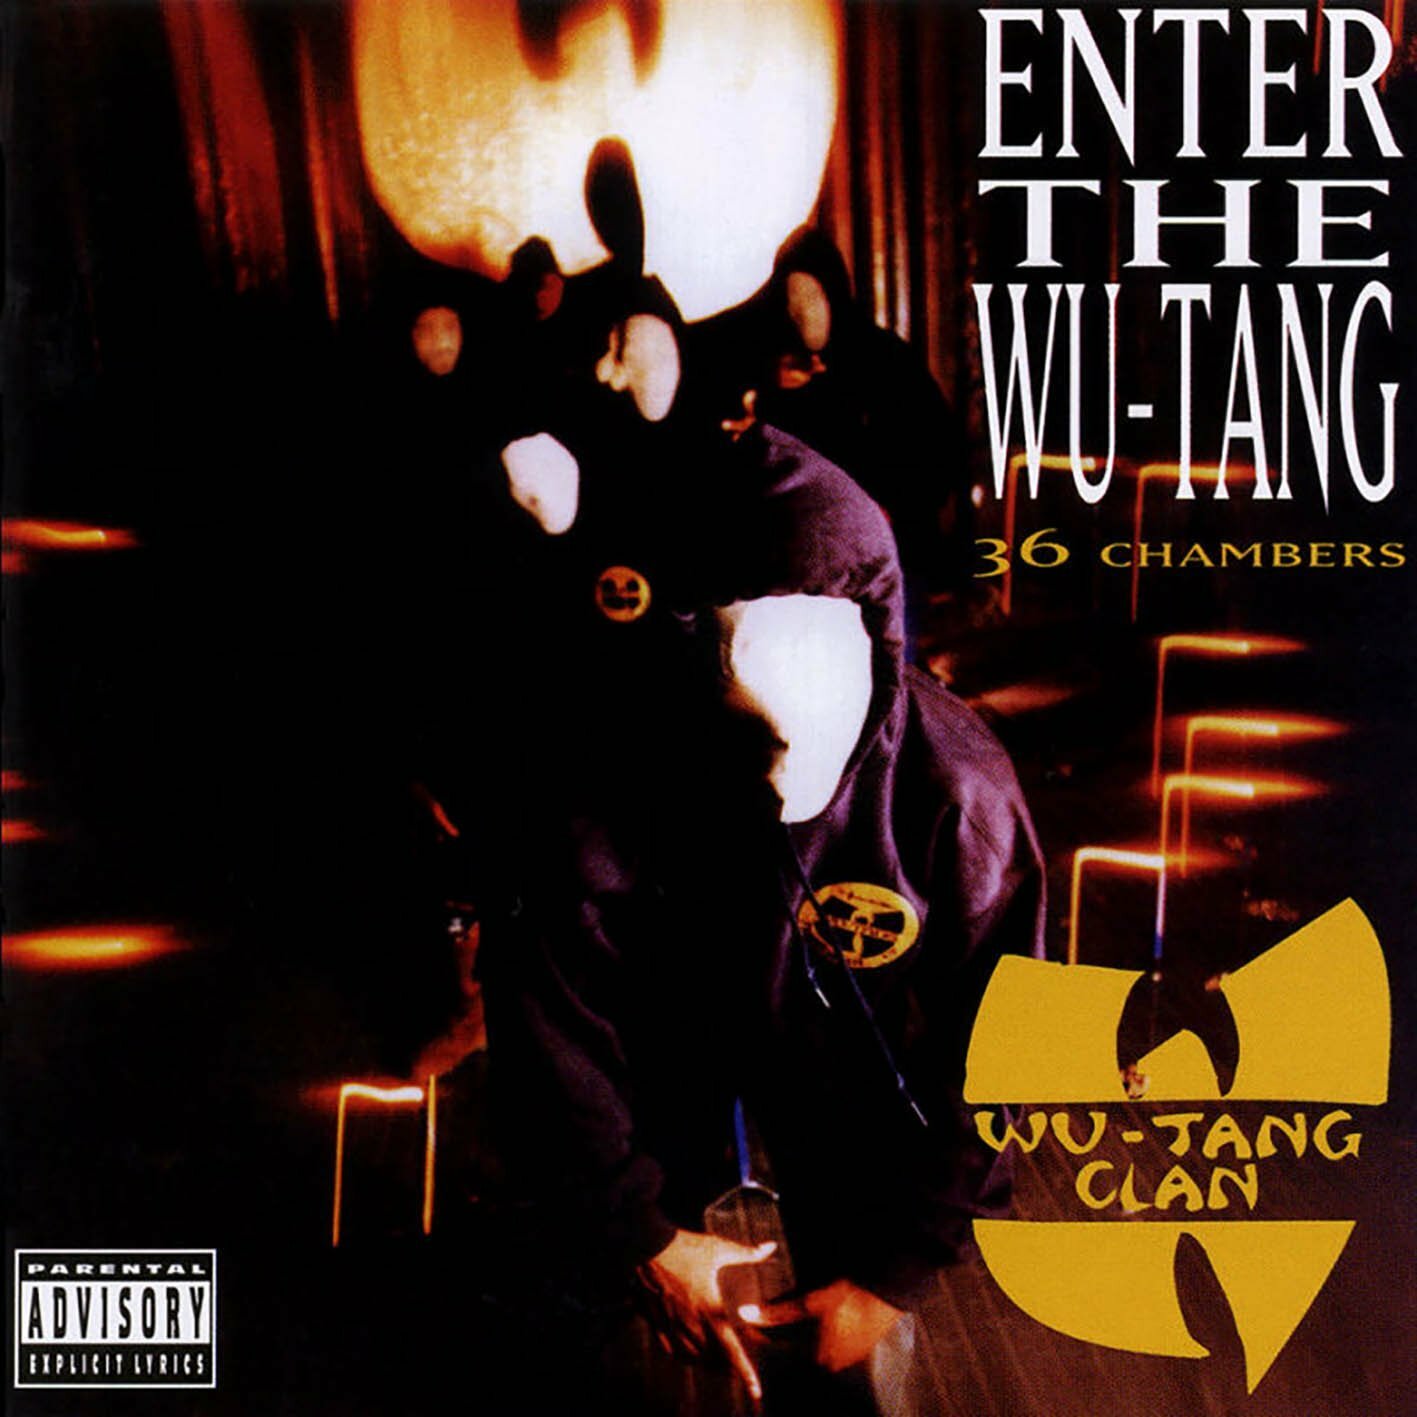 Wu-Tang Clan – Enter The Wu-Tang (36 Chambers) (Limited Yellow Vinyl)